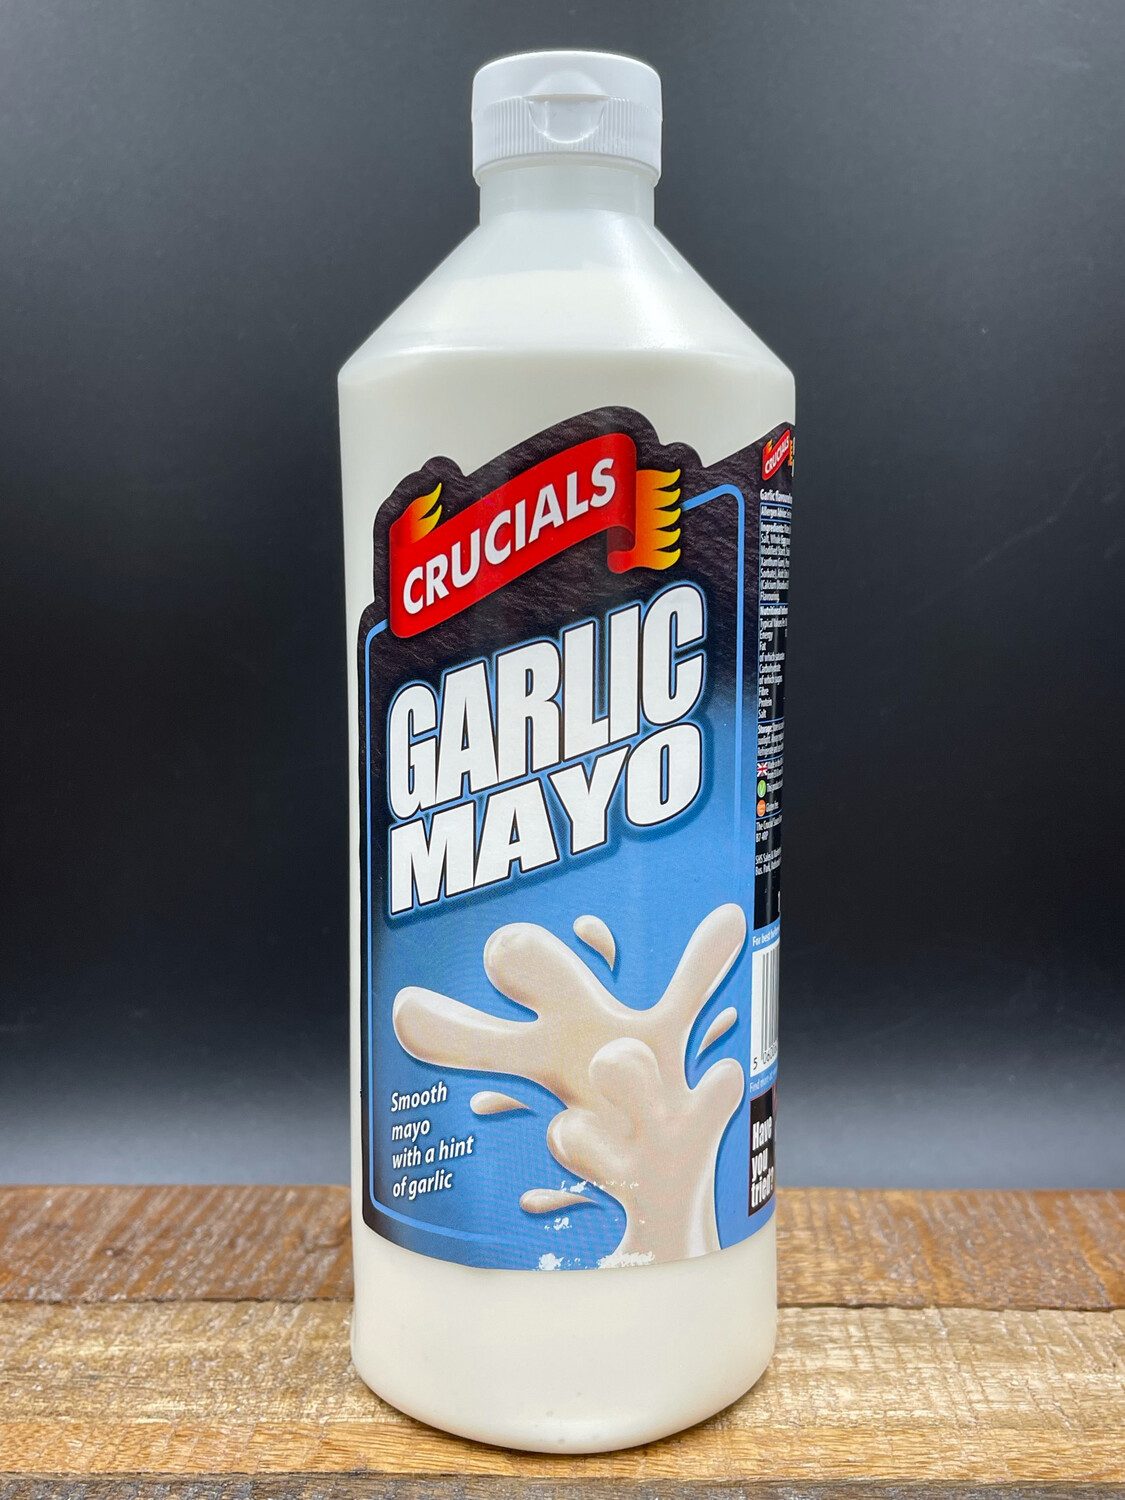 Crucials Garlic Mayo 1L